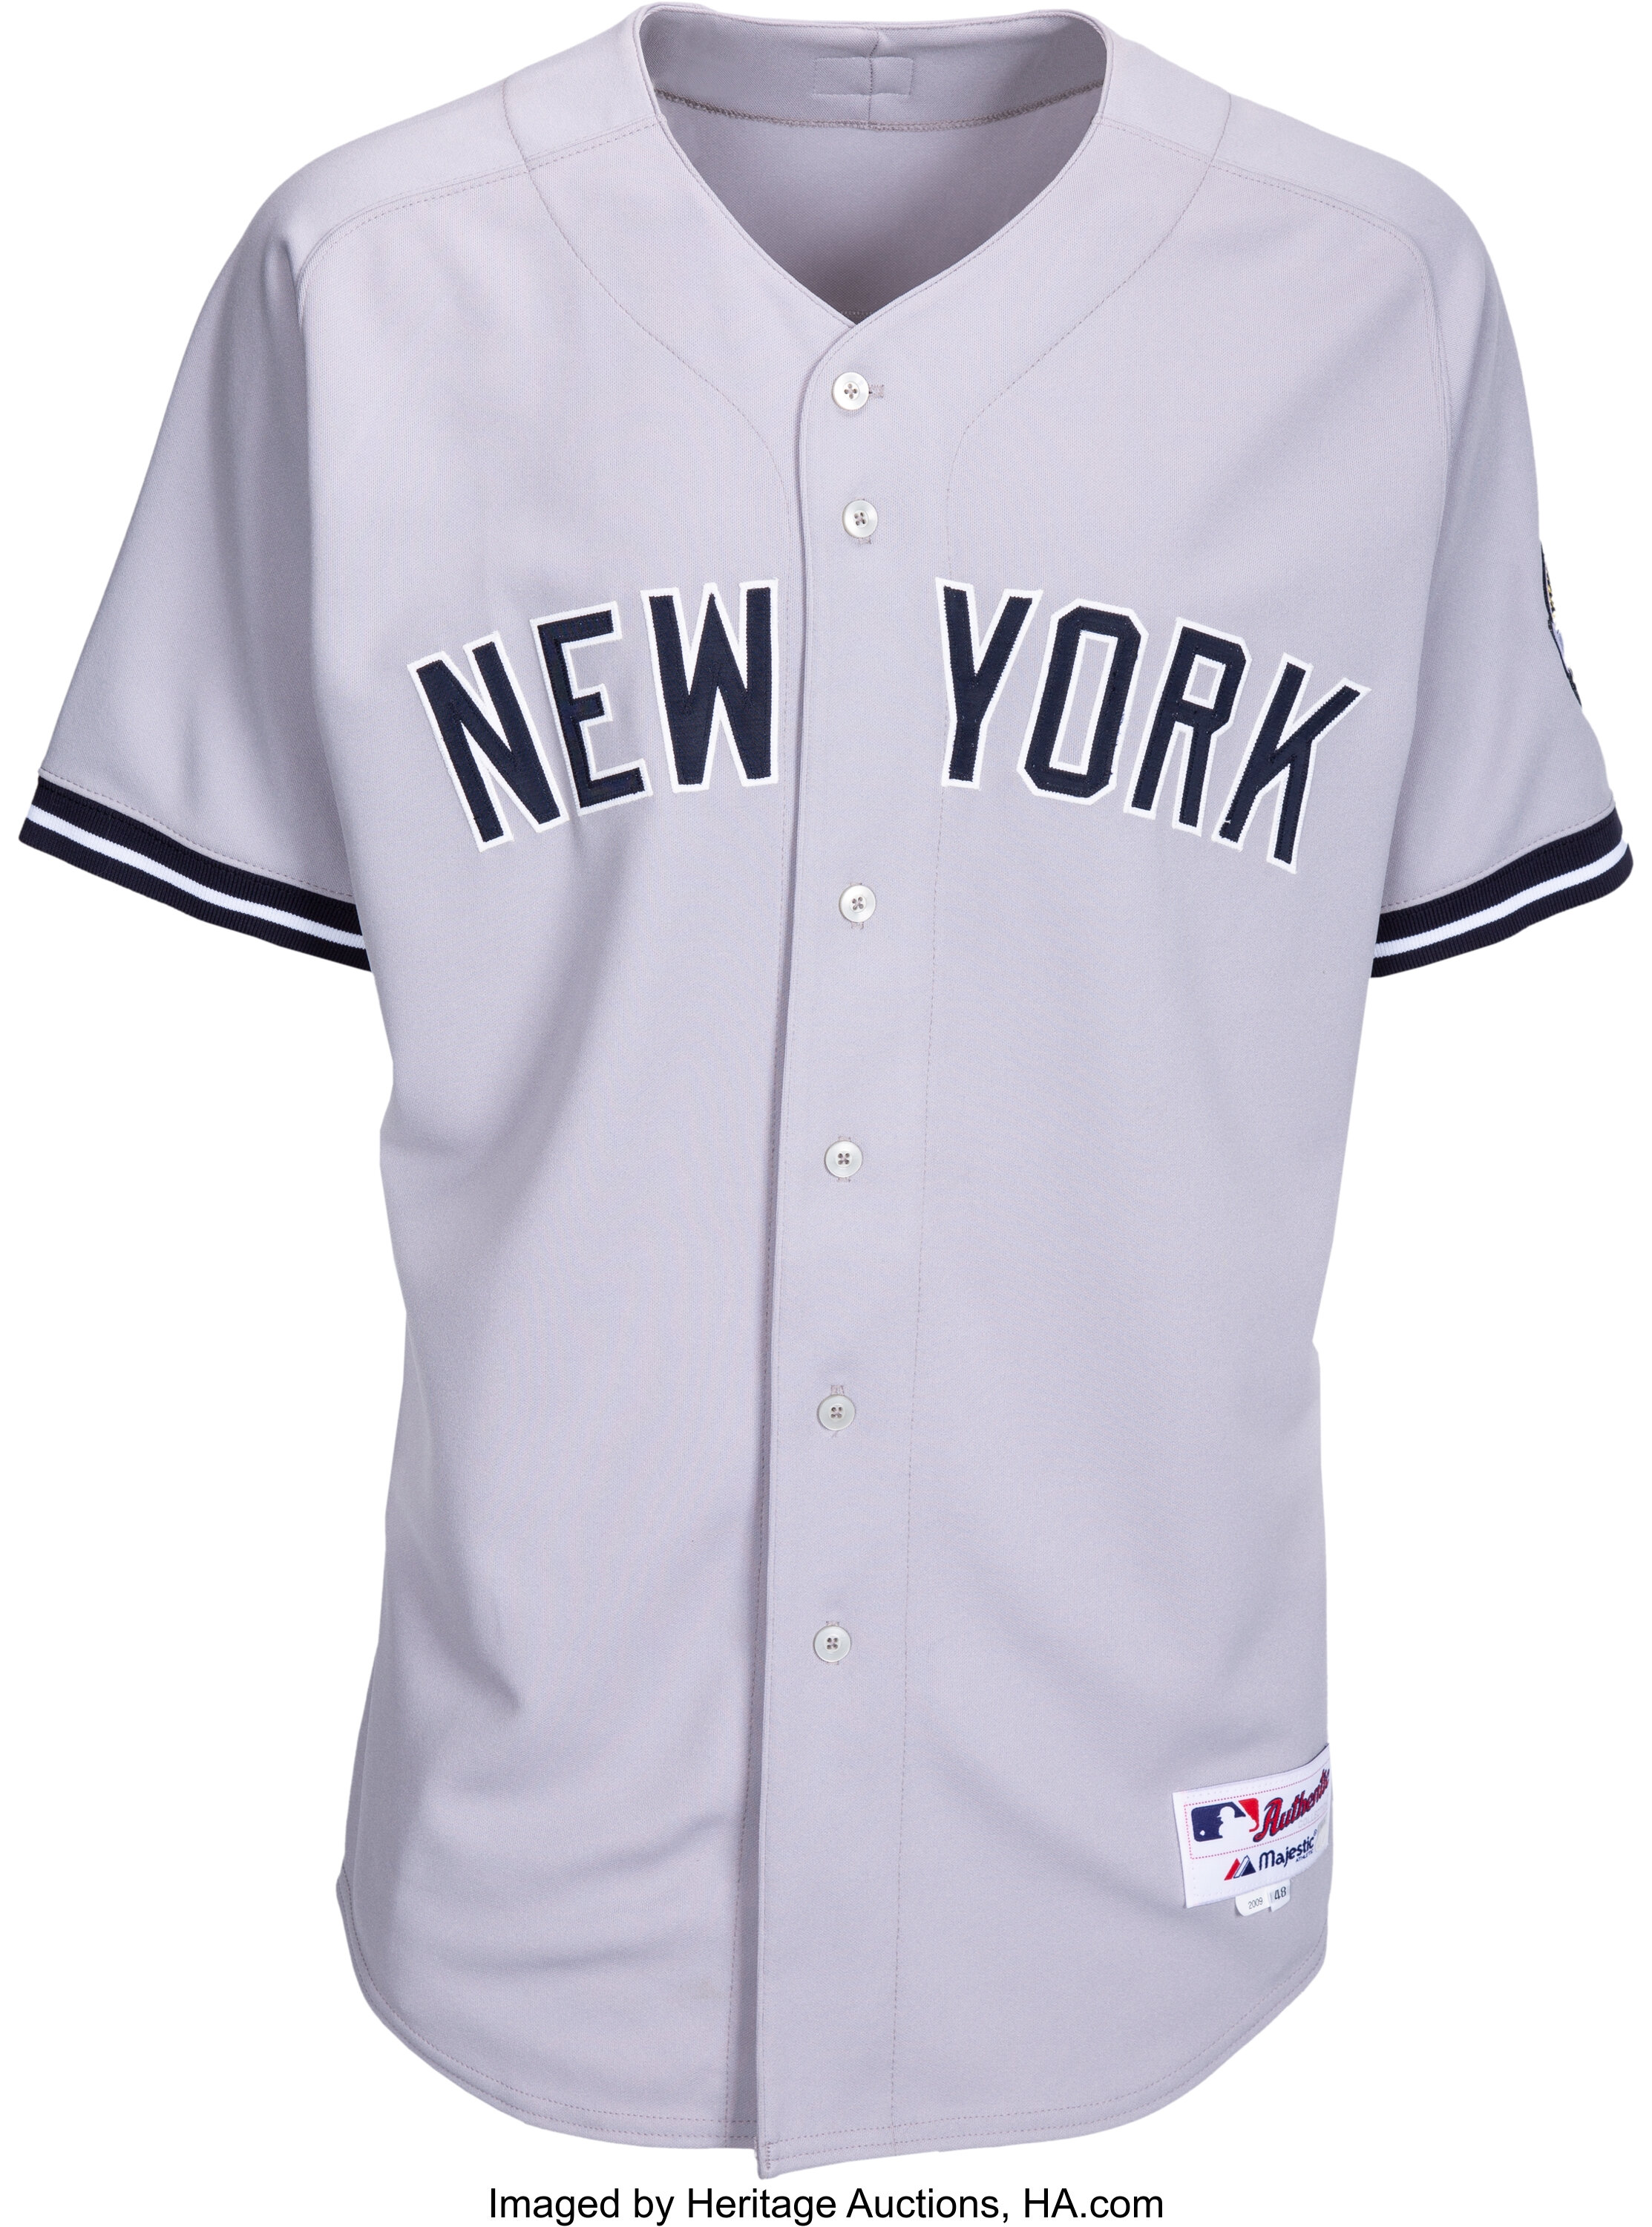 New York Yankees Jerseys, Yankees Baseball Jerseys, Uniforms